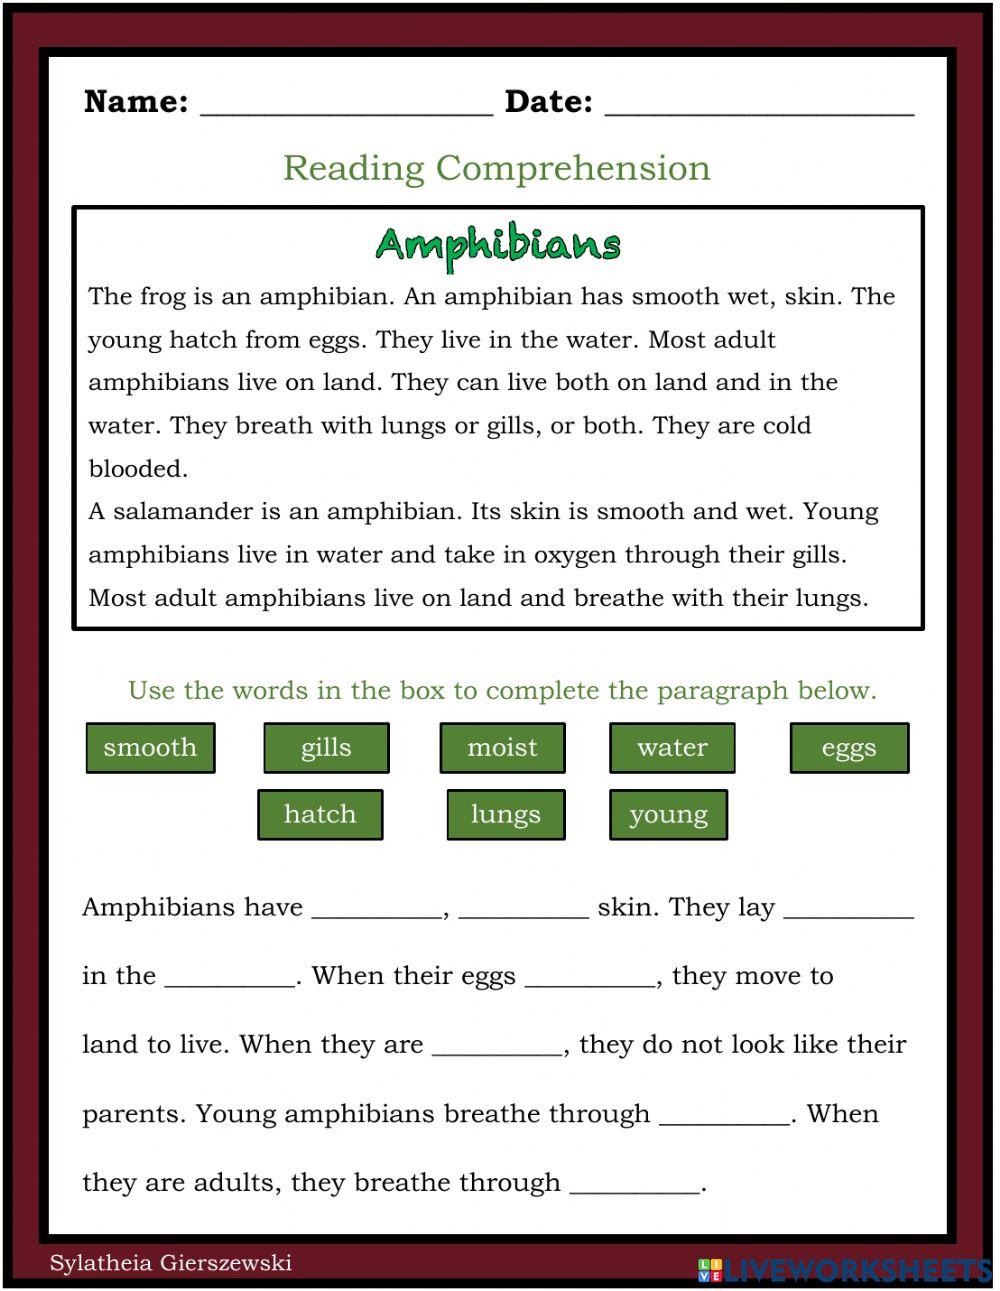 Reading Comprehension (amphibians)